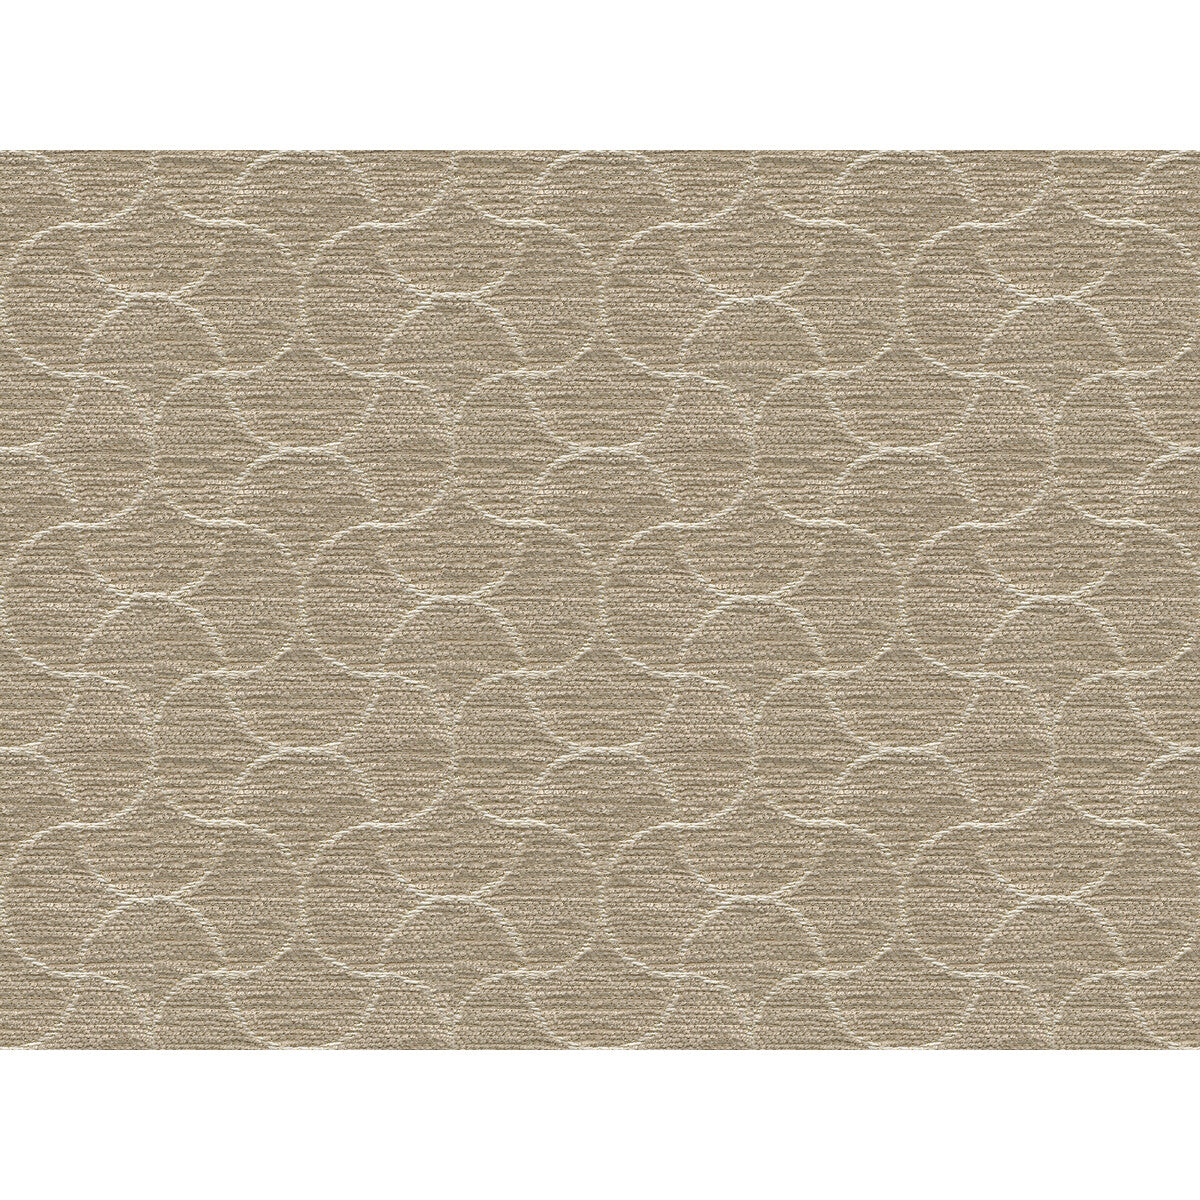 Kravet Smart fabric in 34371-16 color - pattern 34371.16.0 - by Kravet Smart